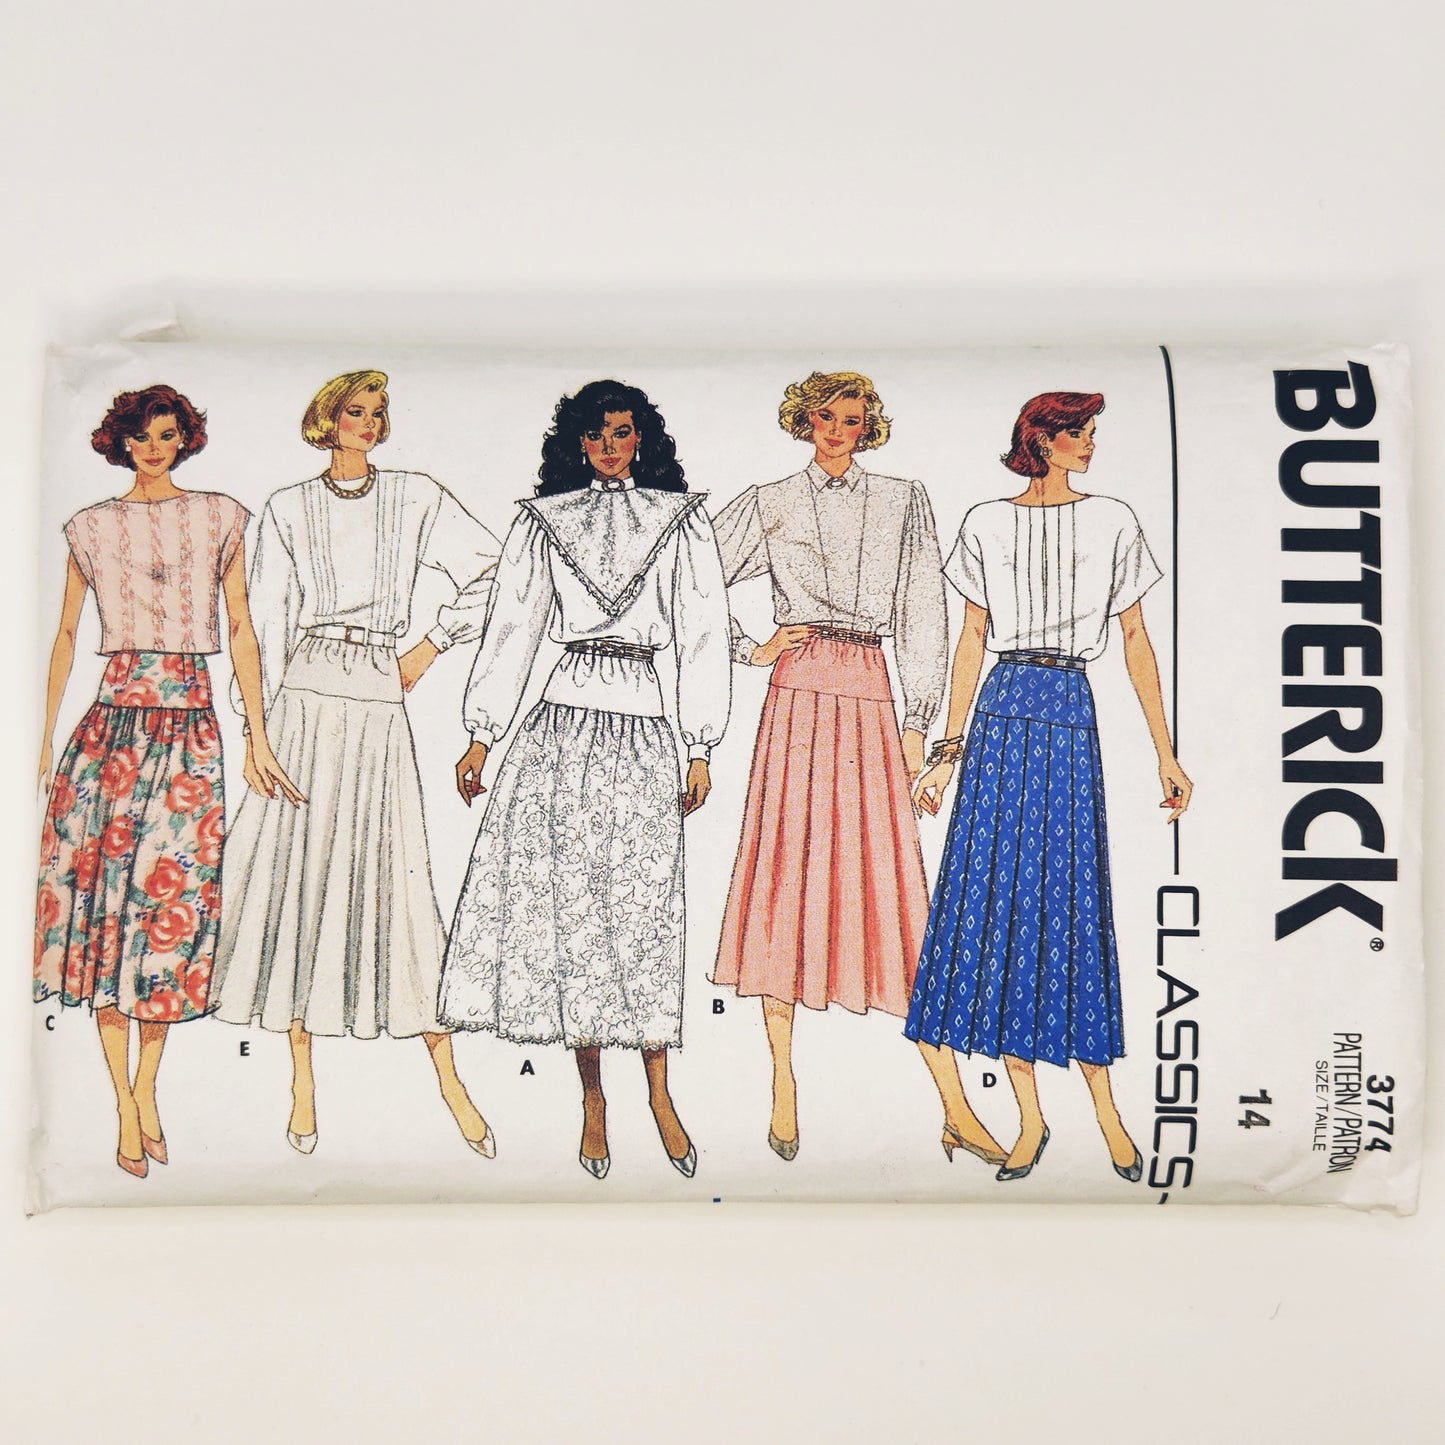 1986 Butterick Pattern 3774 Misses Skirt Size 14